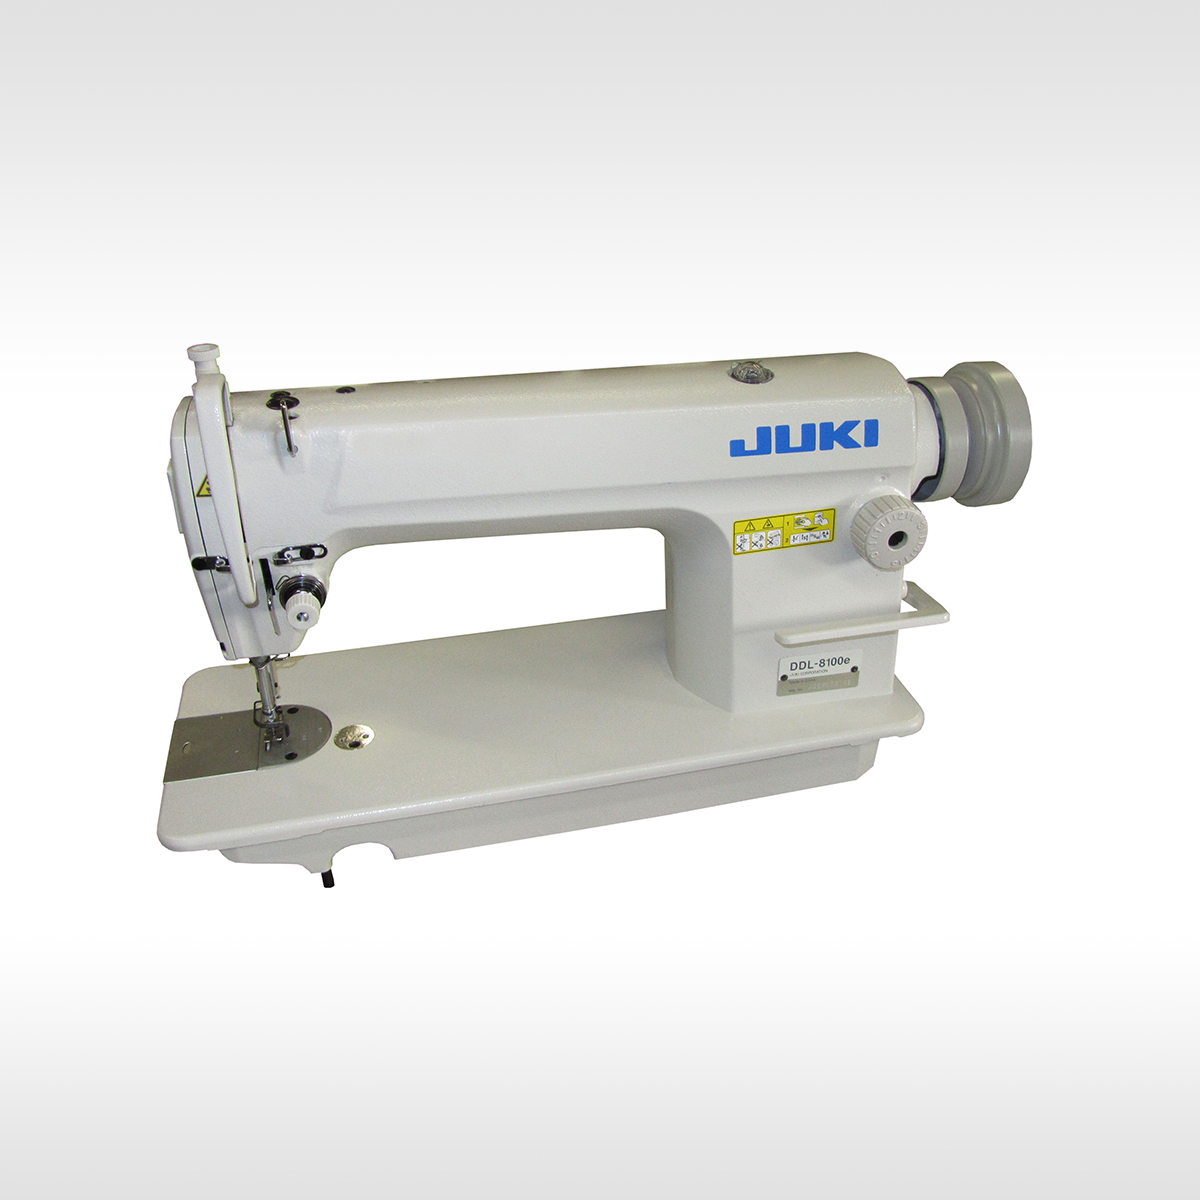 Juki DDL-8100e - Sewing Gold